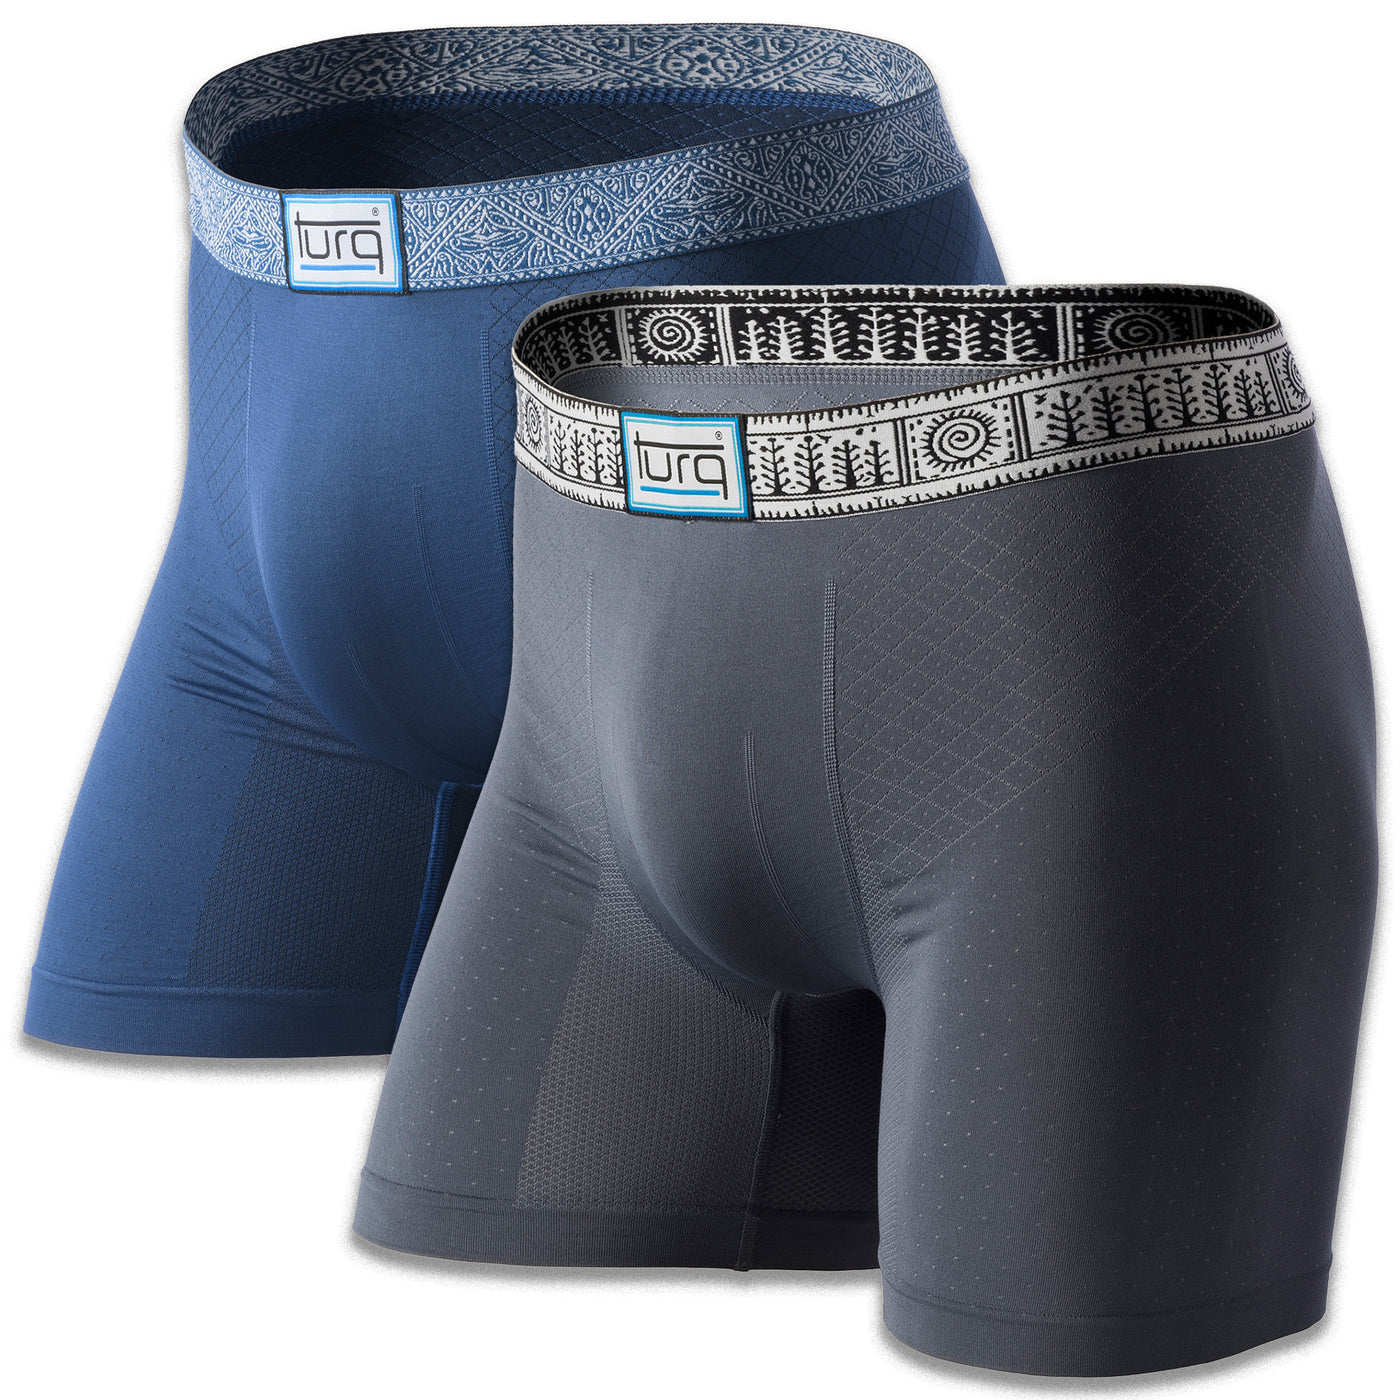 Freestyle Fit Collection | Men's Performance Underwear | Turq Sport